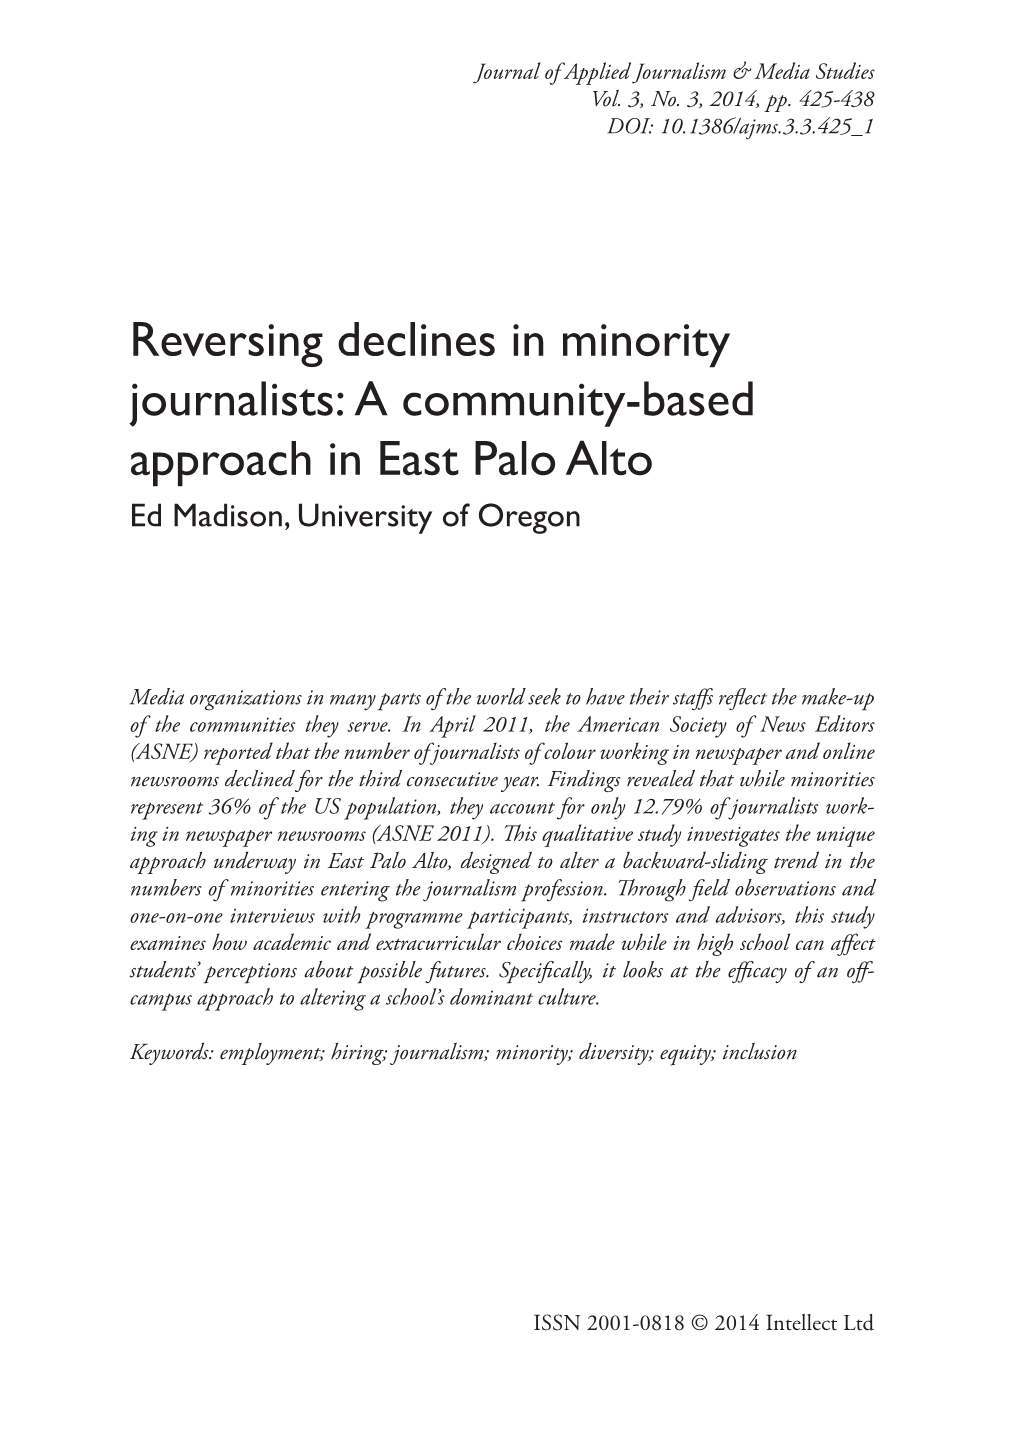 Reversing Declines in Minority Journalists: a Community-Based Approach in East Palo Alto Ed Madison, University of Oregon